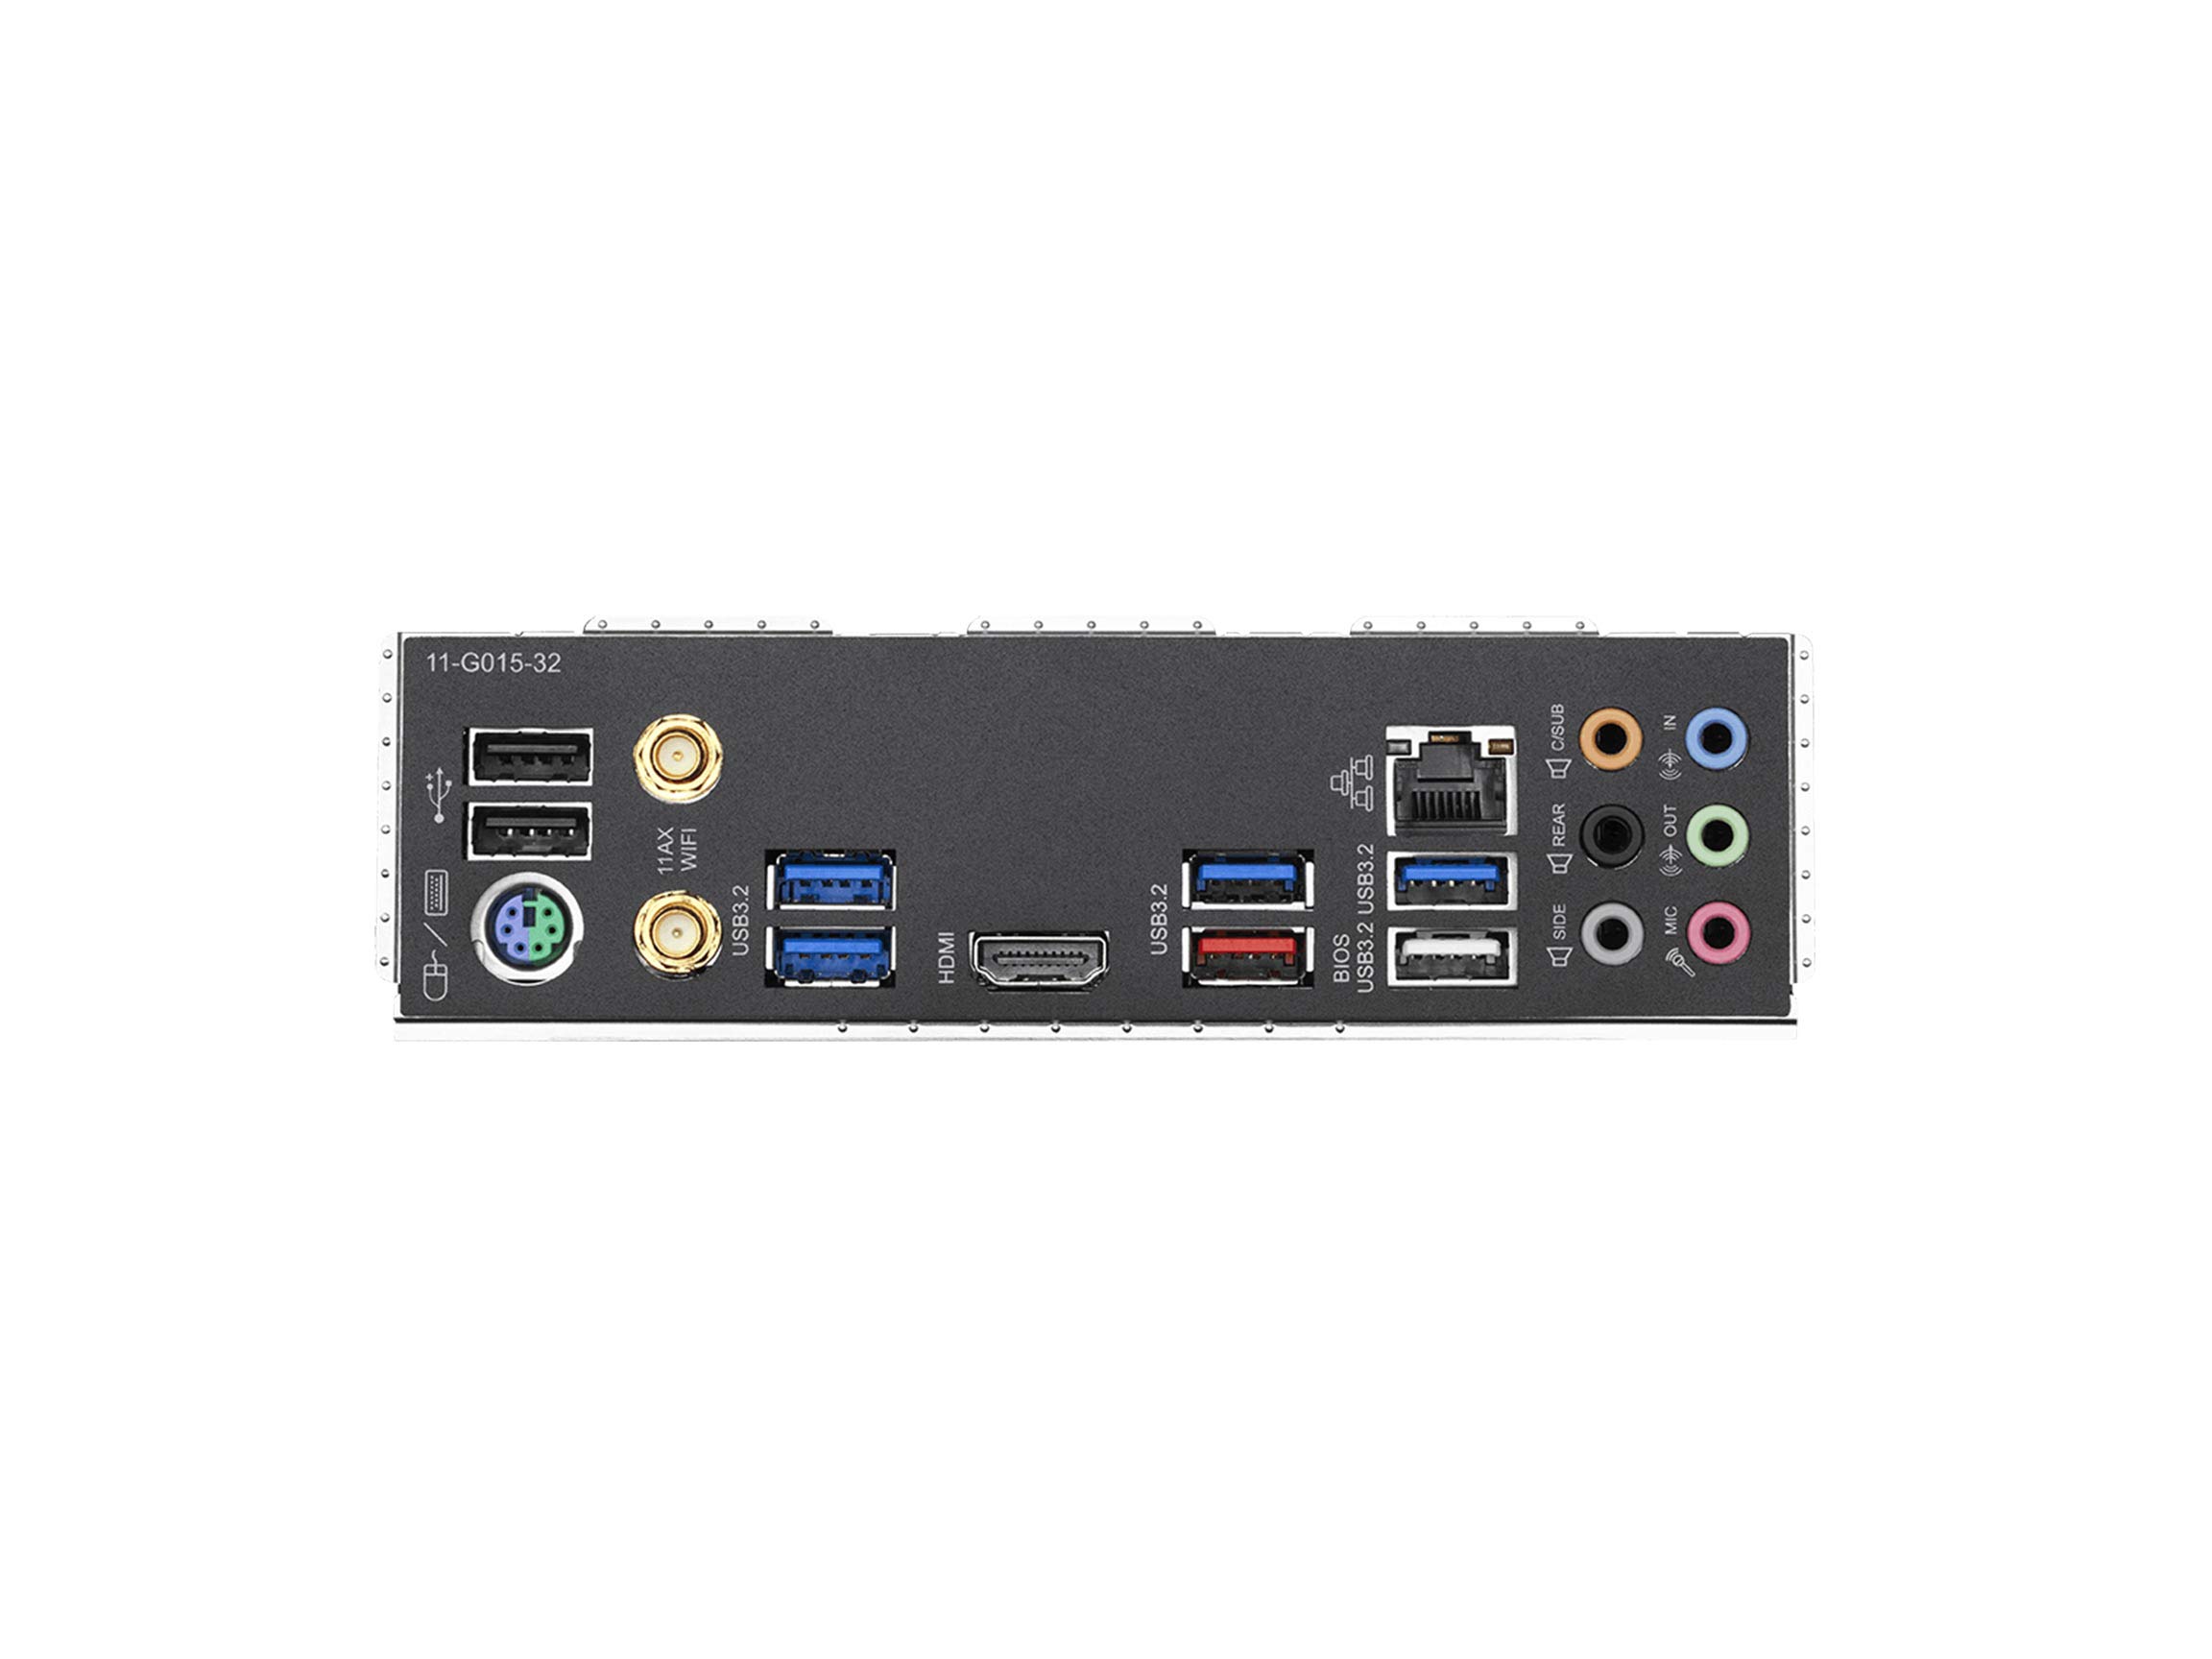 Gigabyte Z490 Gaming X AX (LGA 1200/Intel/Z490/ATX/Dual M.2/SATA 6Gb/s/USB 3.2 Gen 2/WiFi 6/Gaming Motherboard)